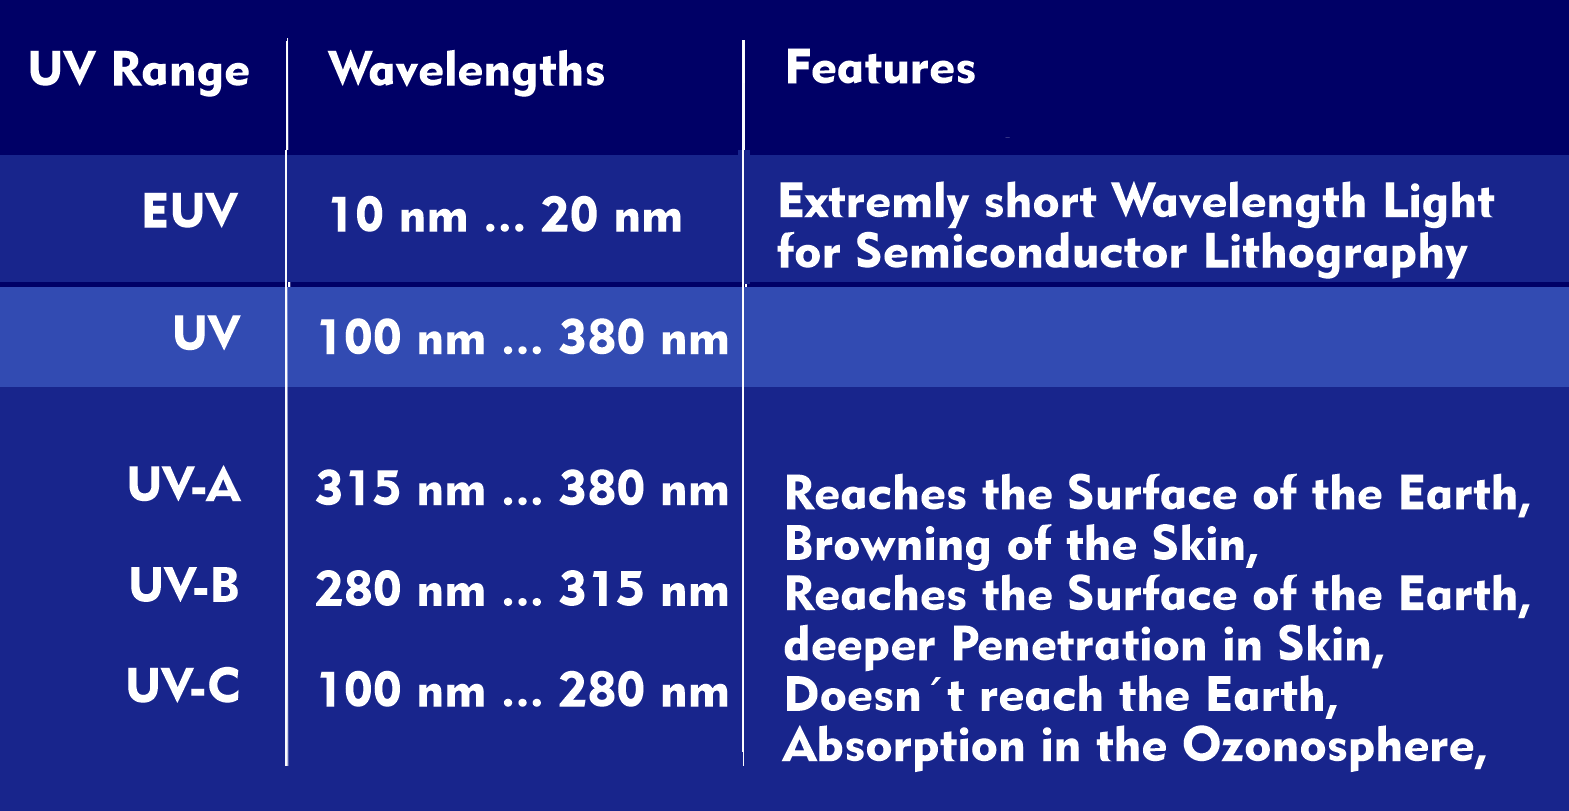 UV light and Extreme Ultraviolet (EUV) with shortest wavelengths